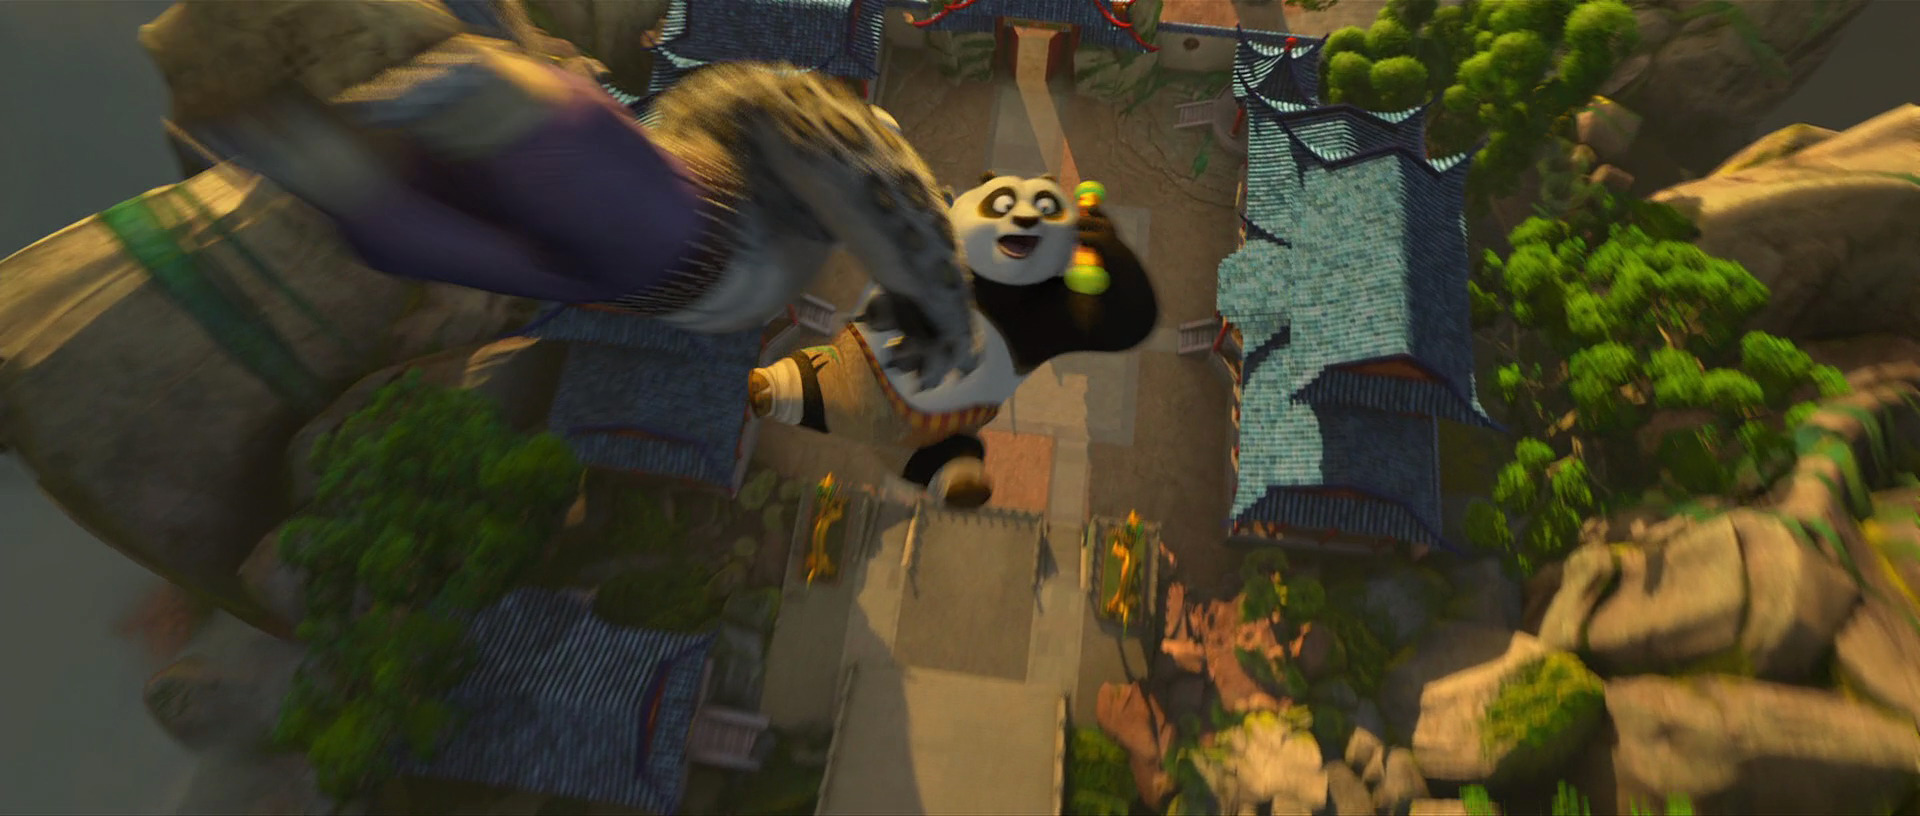 Kung Fu Panda (video game) - Wikipedia